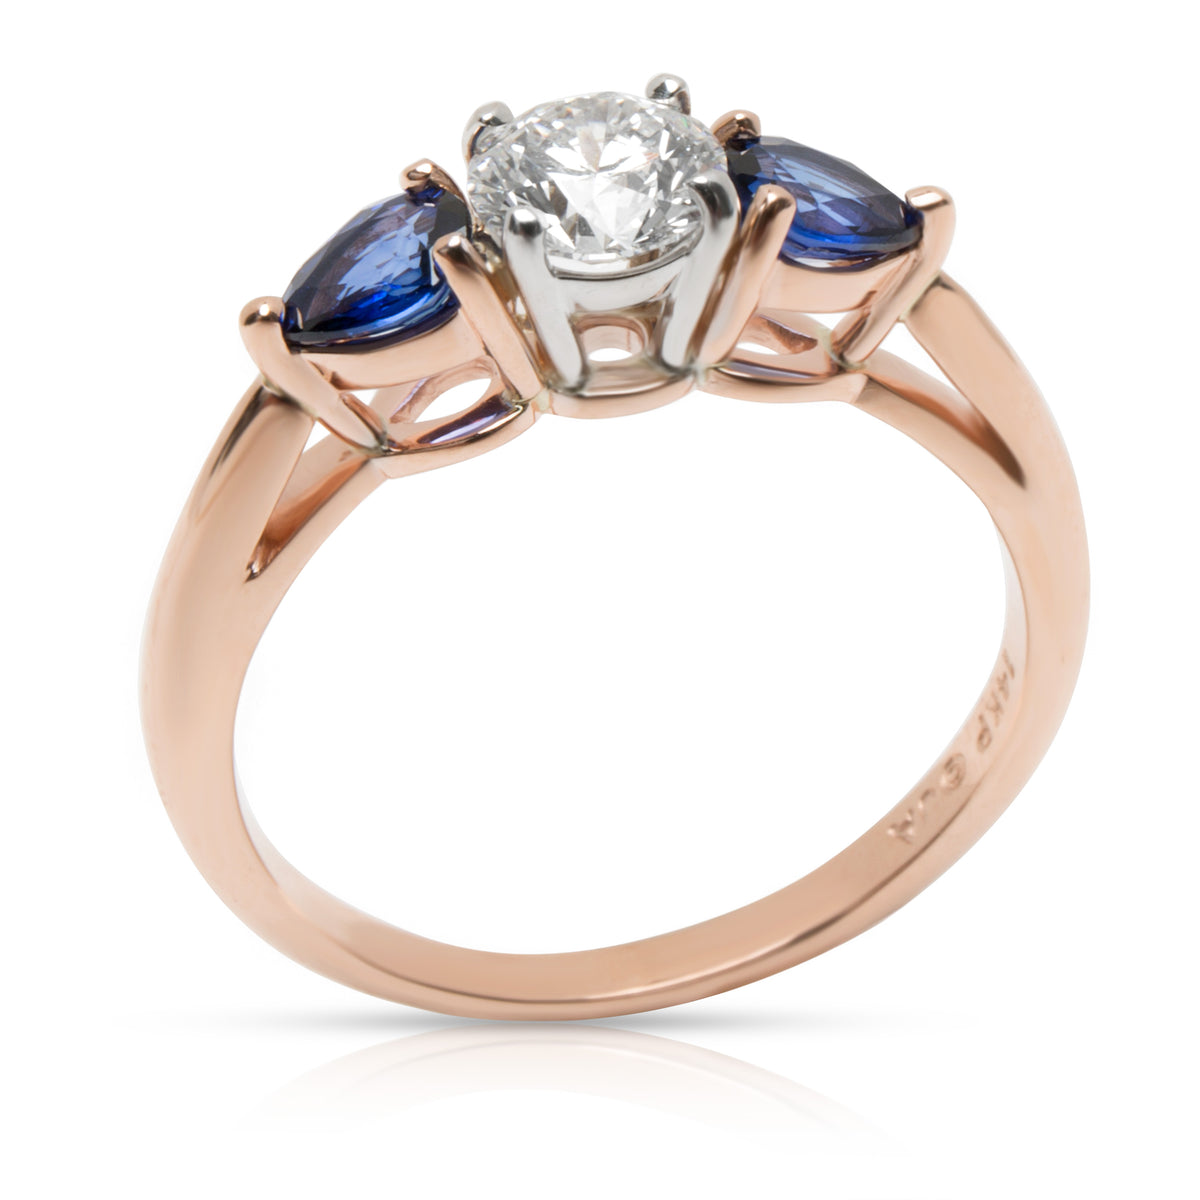 James Allen Three Stone Diamond & Sapphire Engagement Ring 14K Rose Gold 1.50CTW